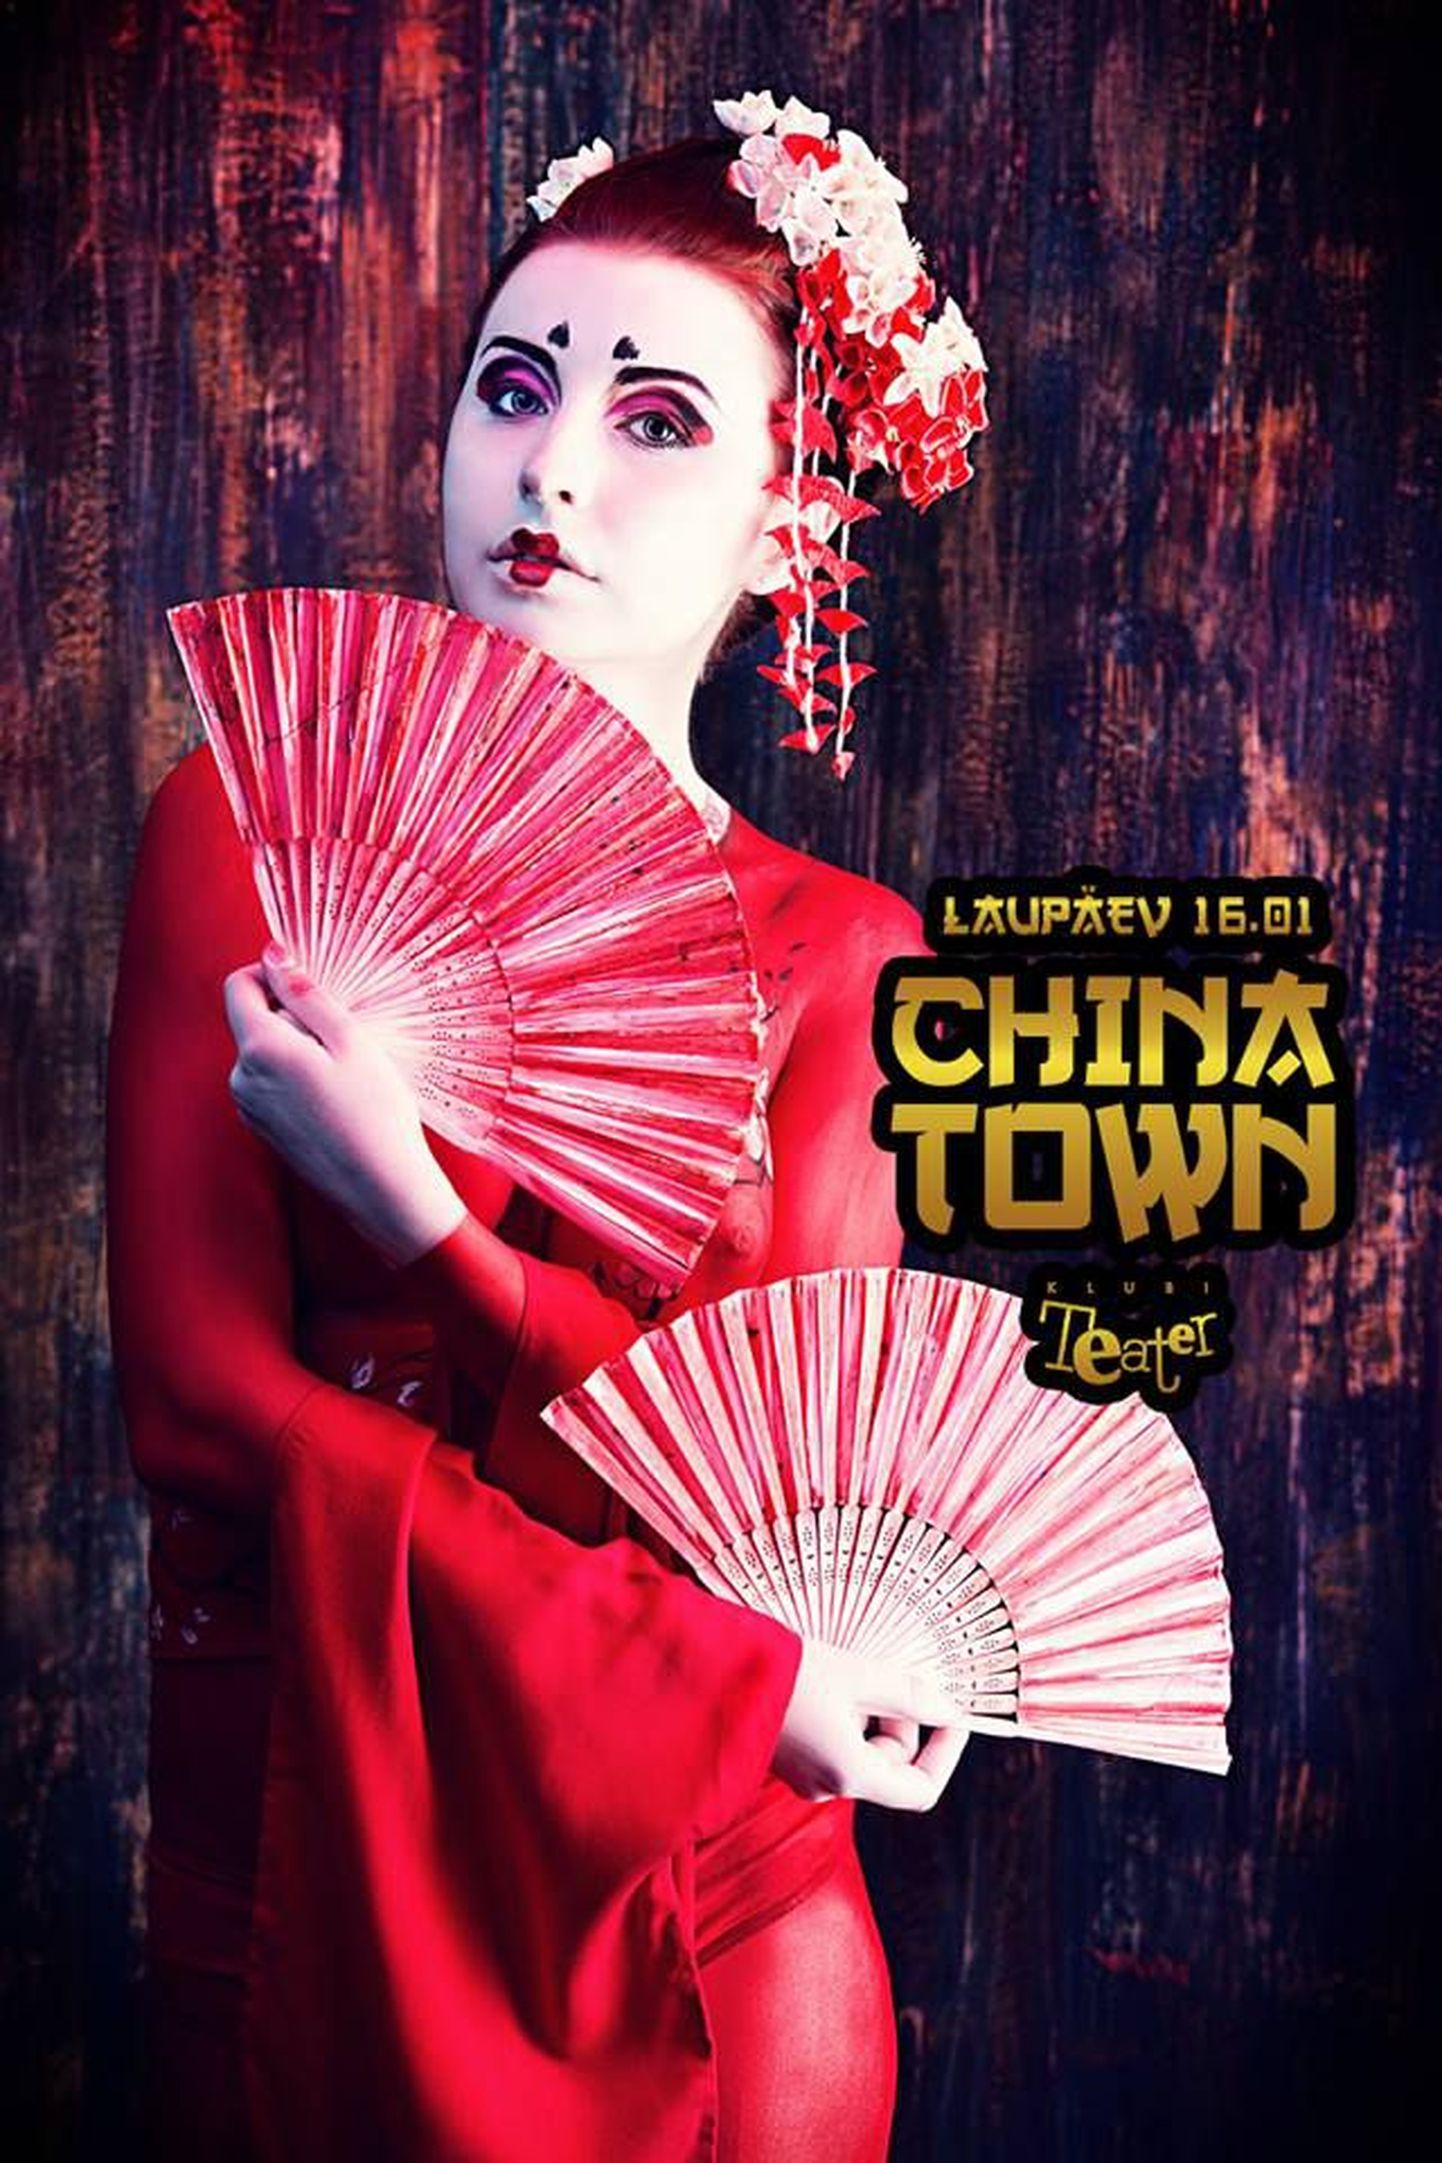 Uus üritustesari Chinatown klubis Teater